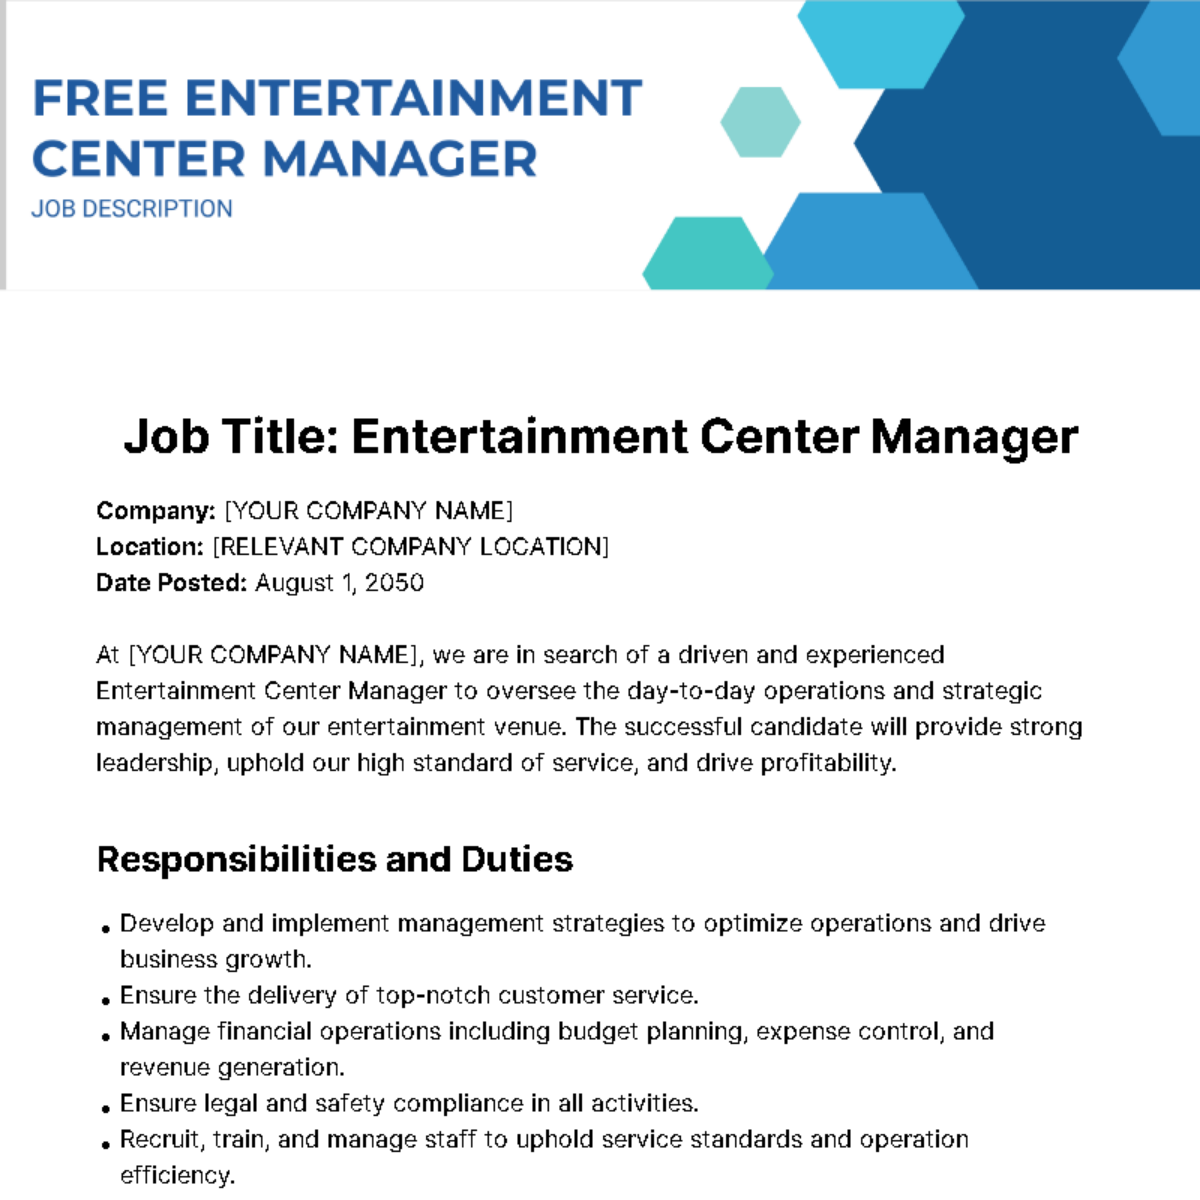 Free Entertainment Center Manager Job Description Template